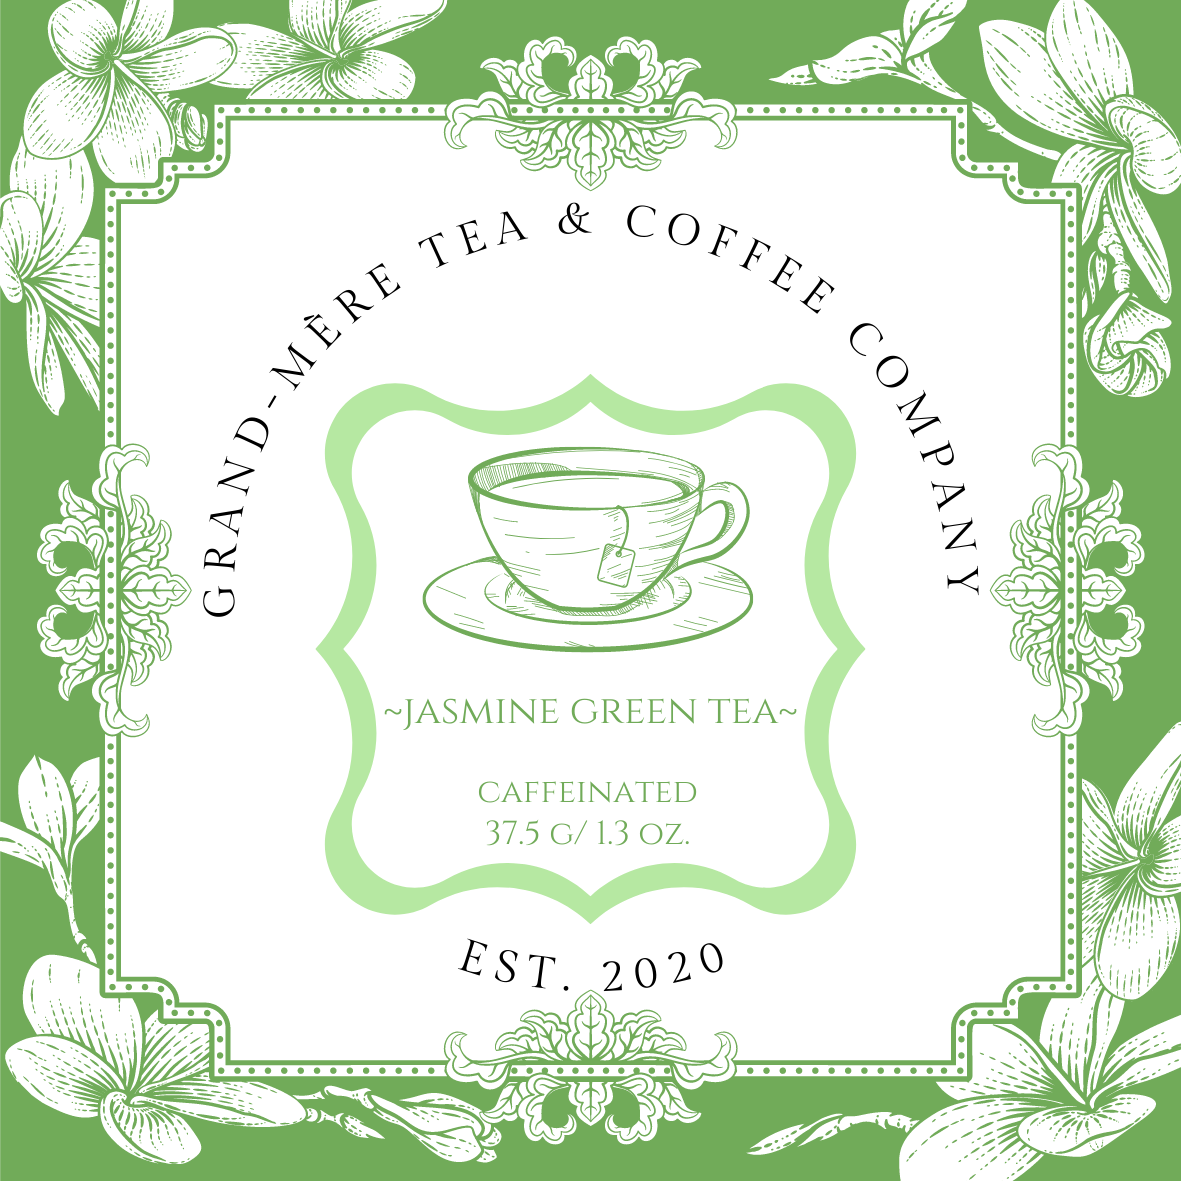 Grand-Mère Signature “Jasmine Green” Tea